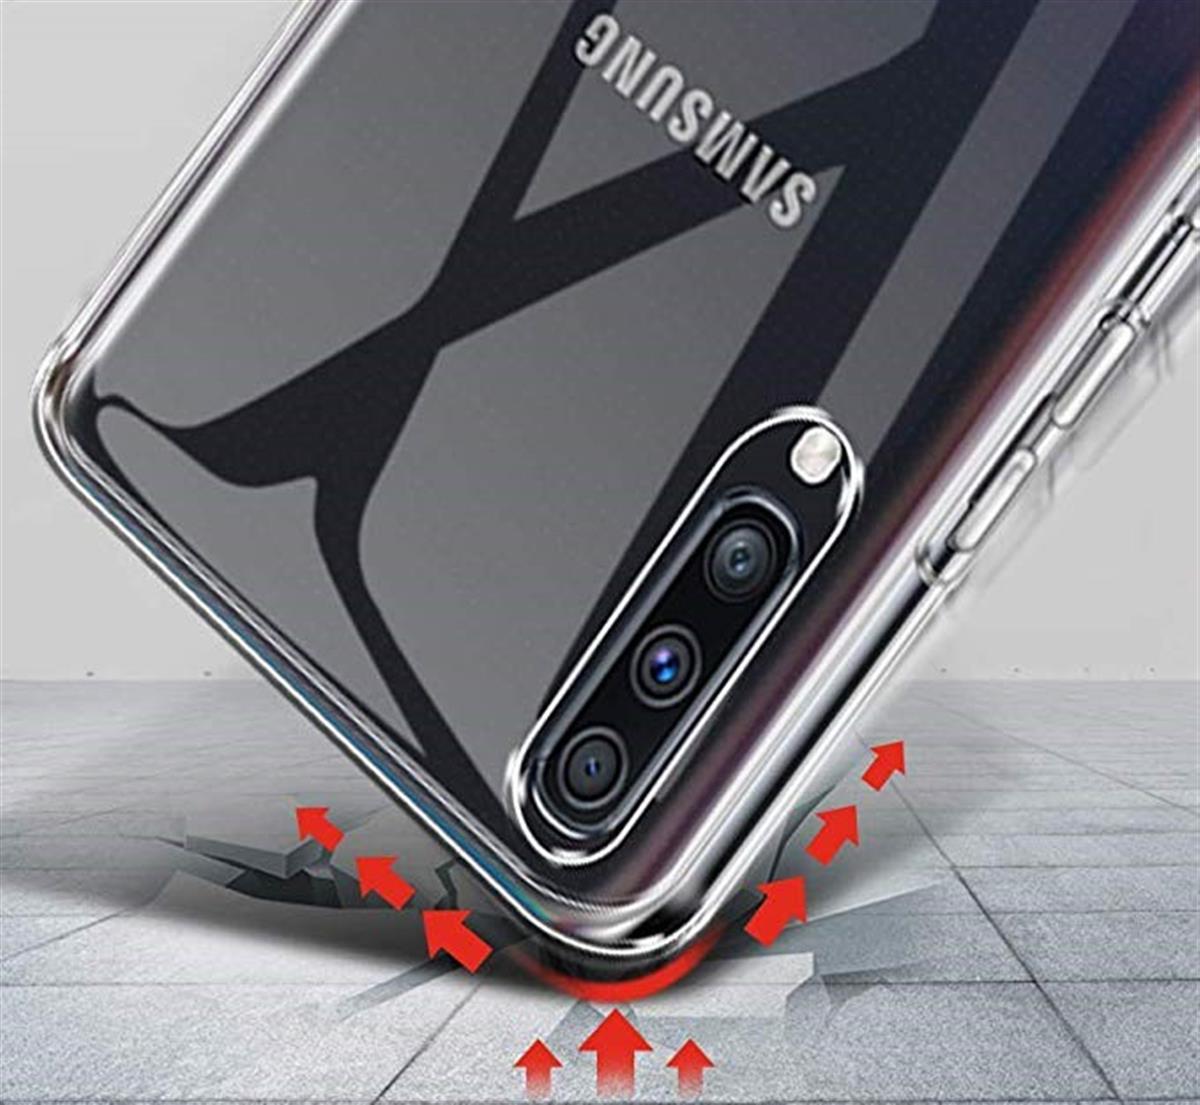 Hülle für Samsung Galaxy A70 Handyhülle Silikon Cover Schutzhülle transparent